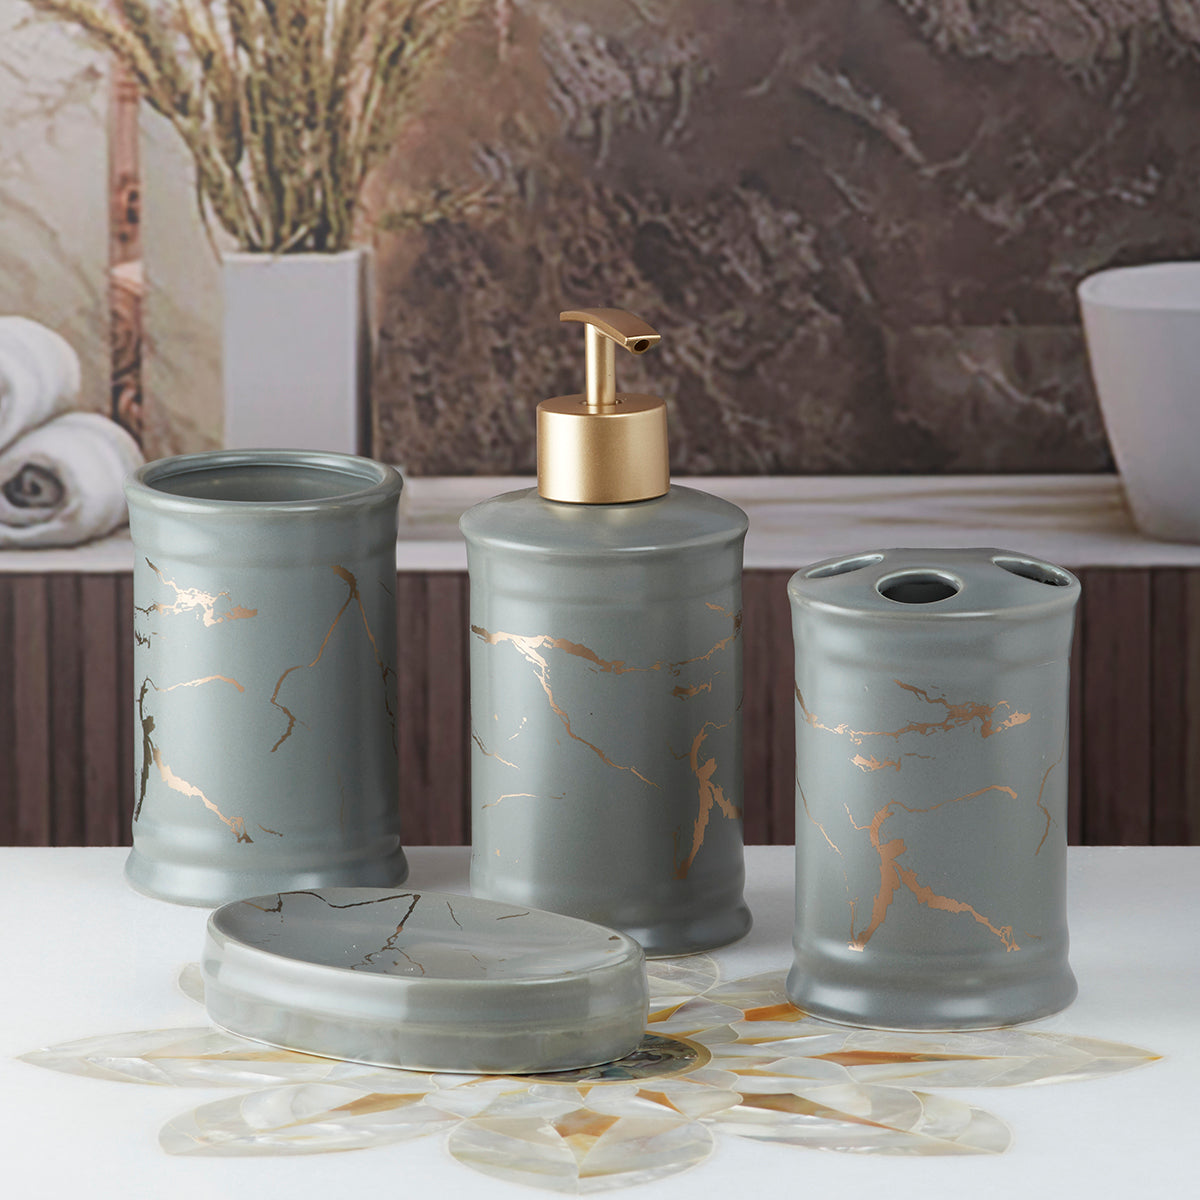 Ceramic Bathroom Accessories Set of 4 Bath Set with Soap Dispenser (8226)